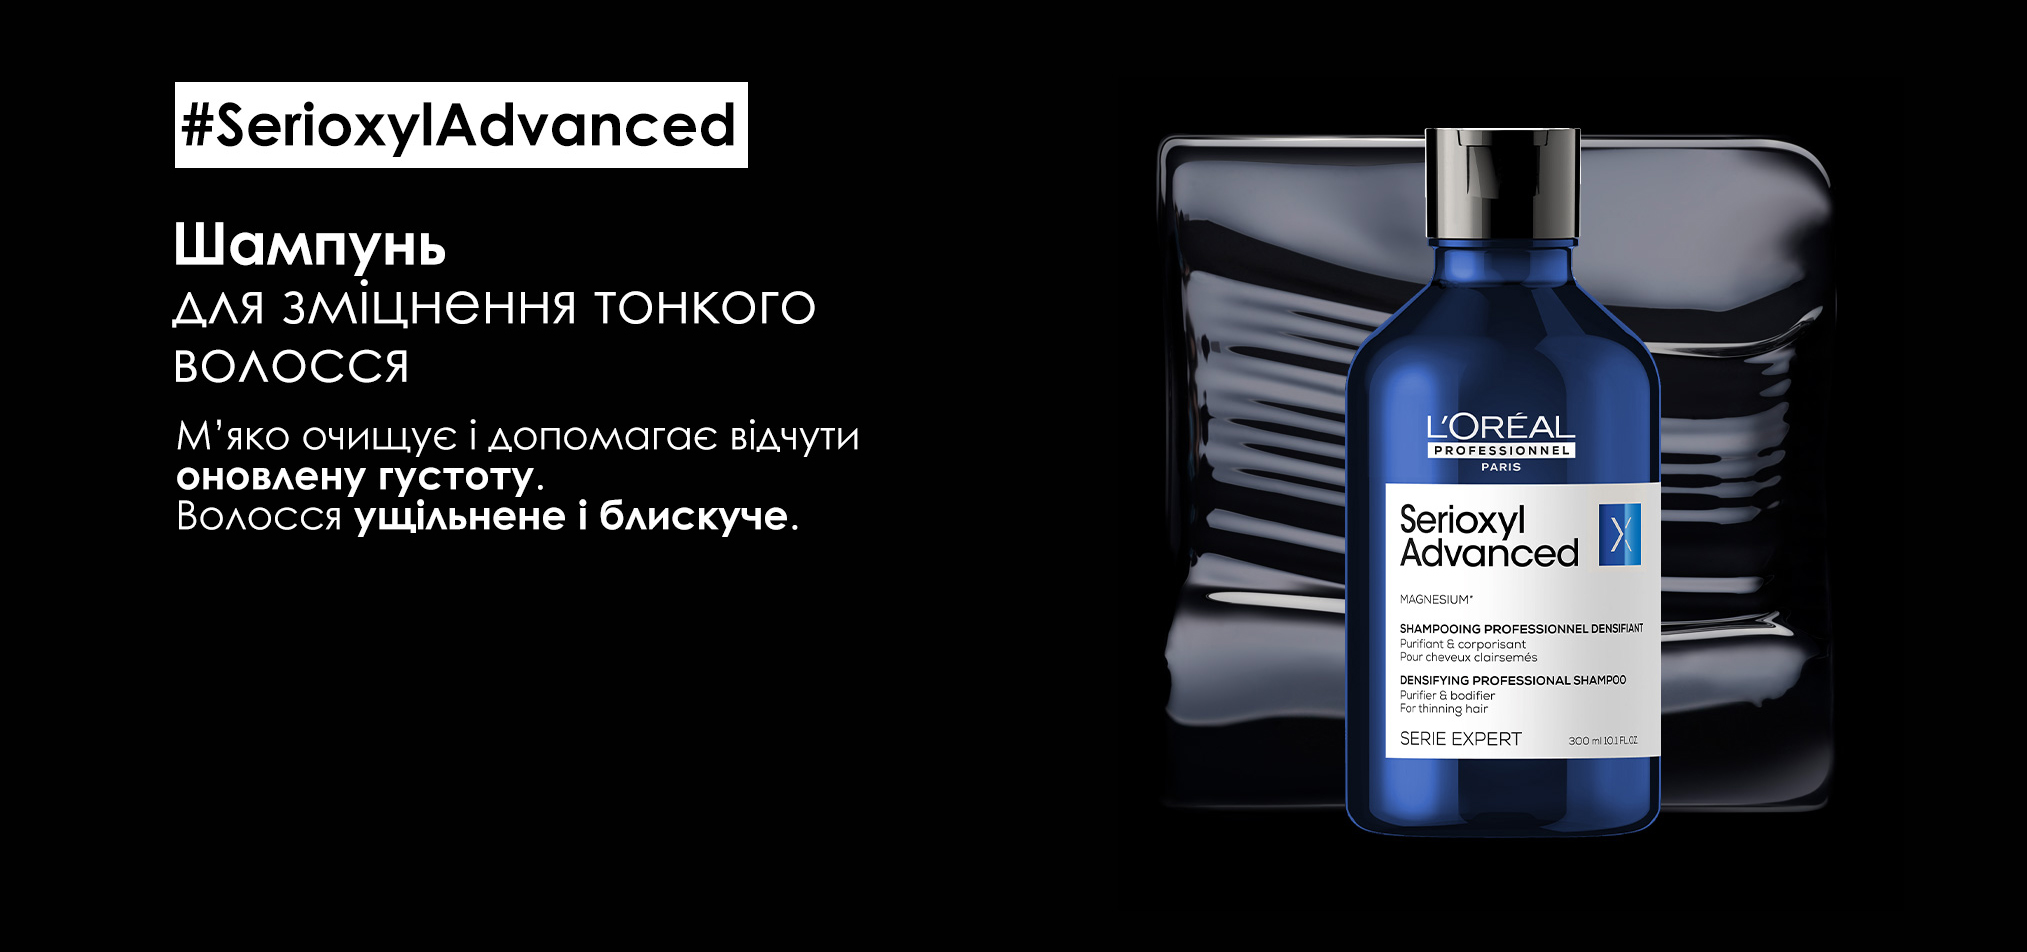 L'Oreal Professionnel Serioxyl Advanced Densifying Professional Shampoo